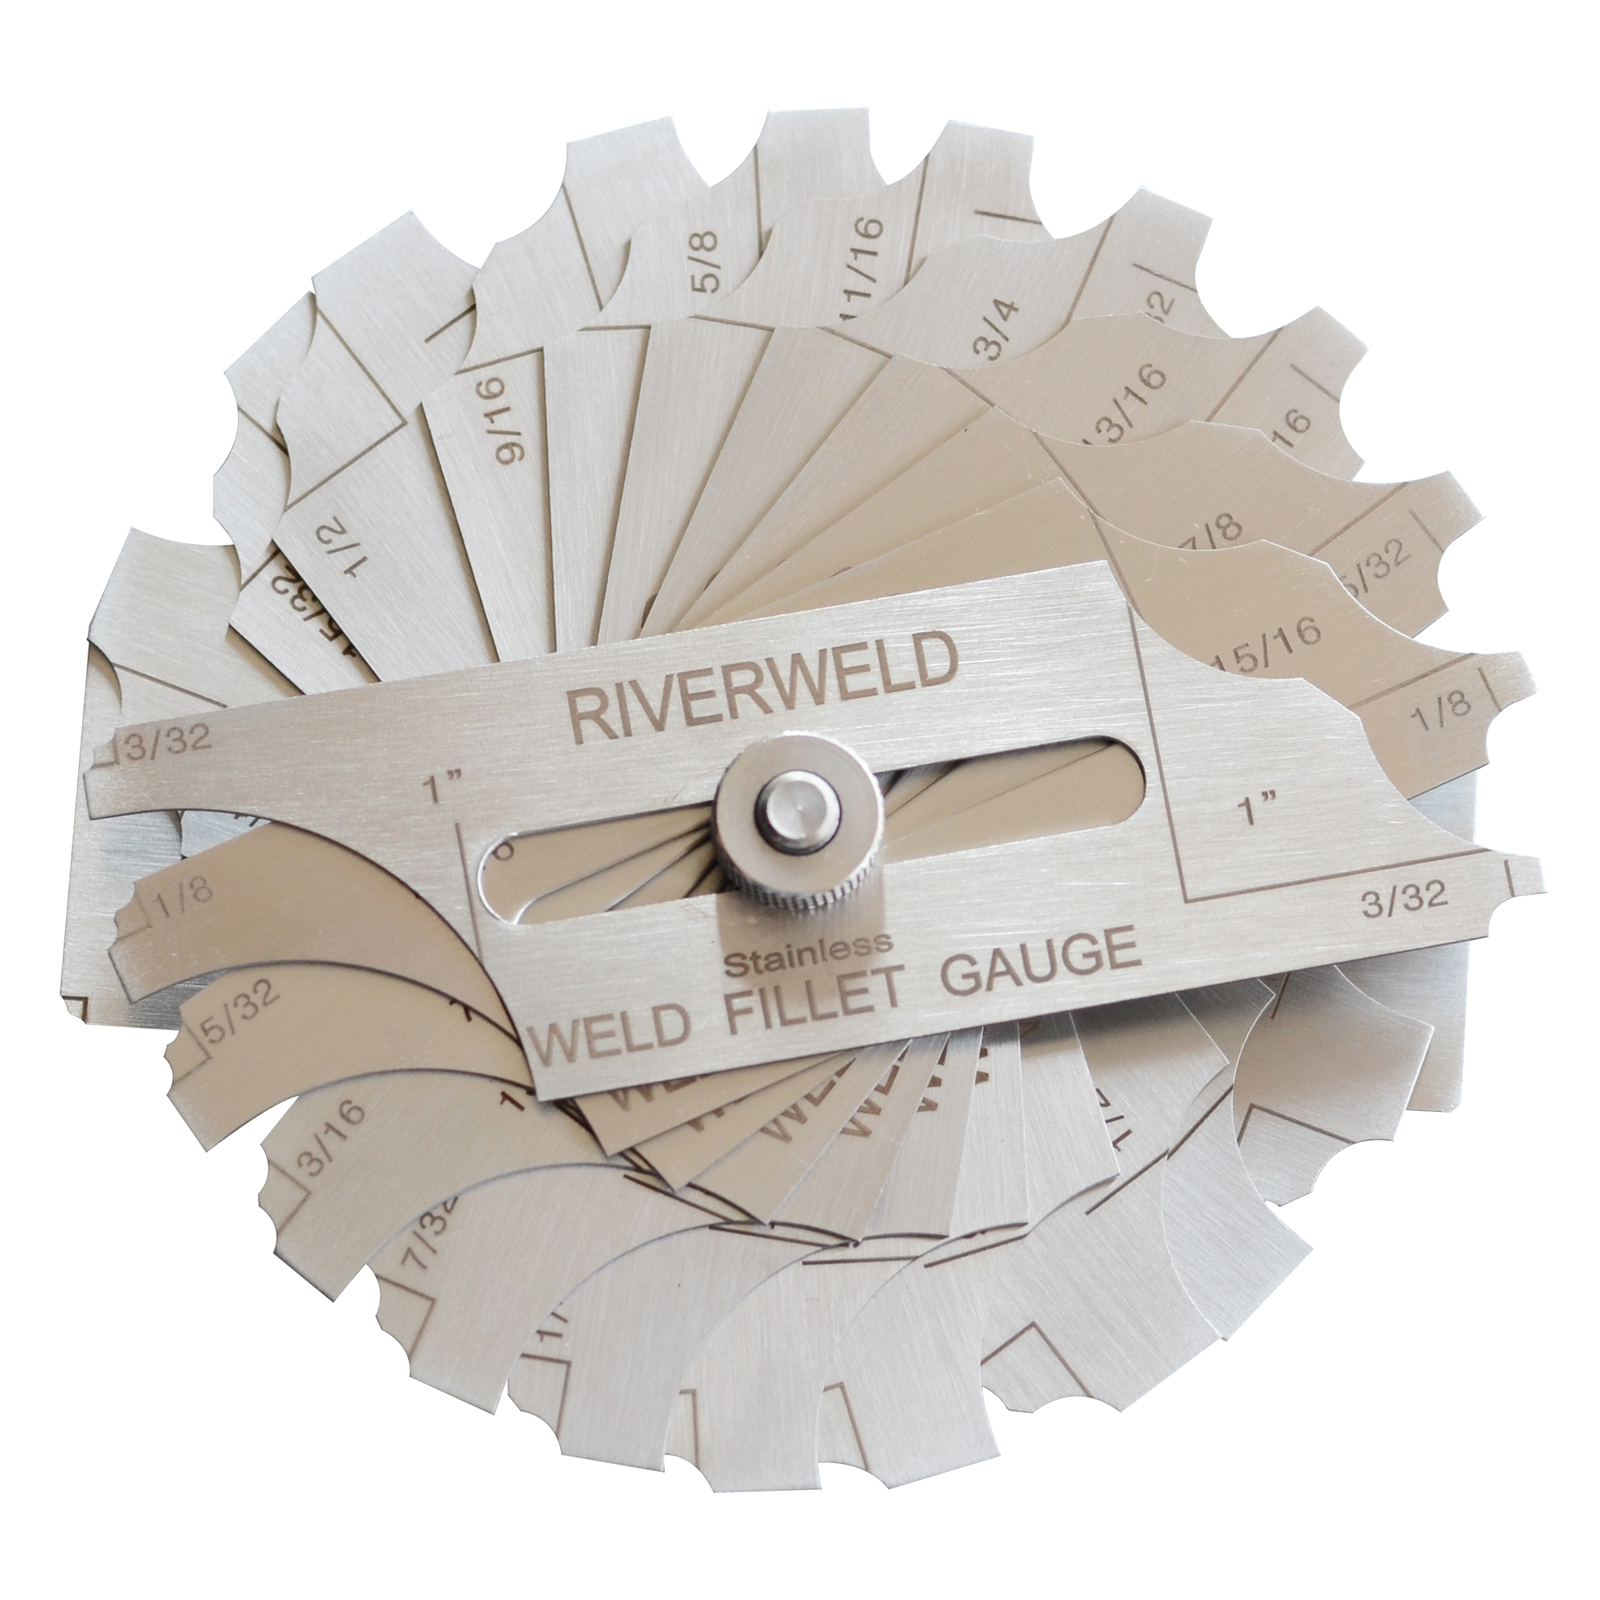 RIVERWELD 12 Piece Fillet Weld Set 1/32" increments to 1/2", 1/16" increments to 1" Inch RL Gauge Welding Inspection Test Ulnar